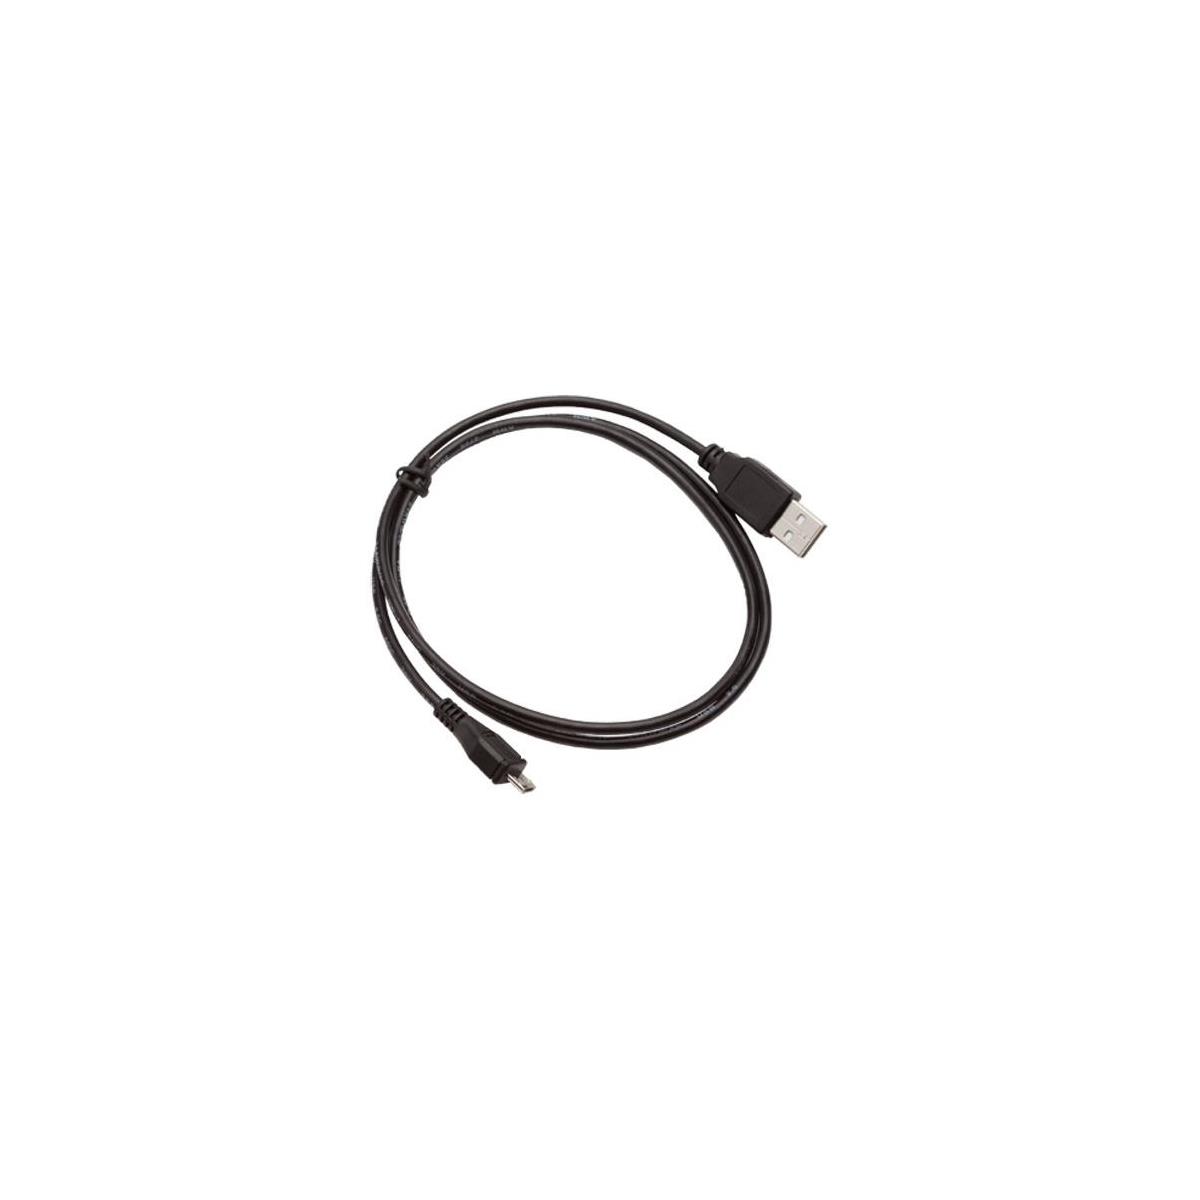 Image of Listen Technologies LA-422 USB to Micro USB Cable